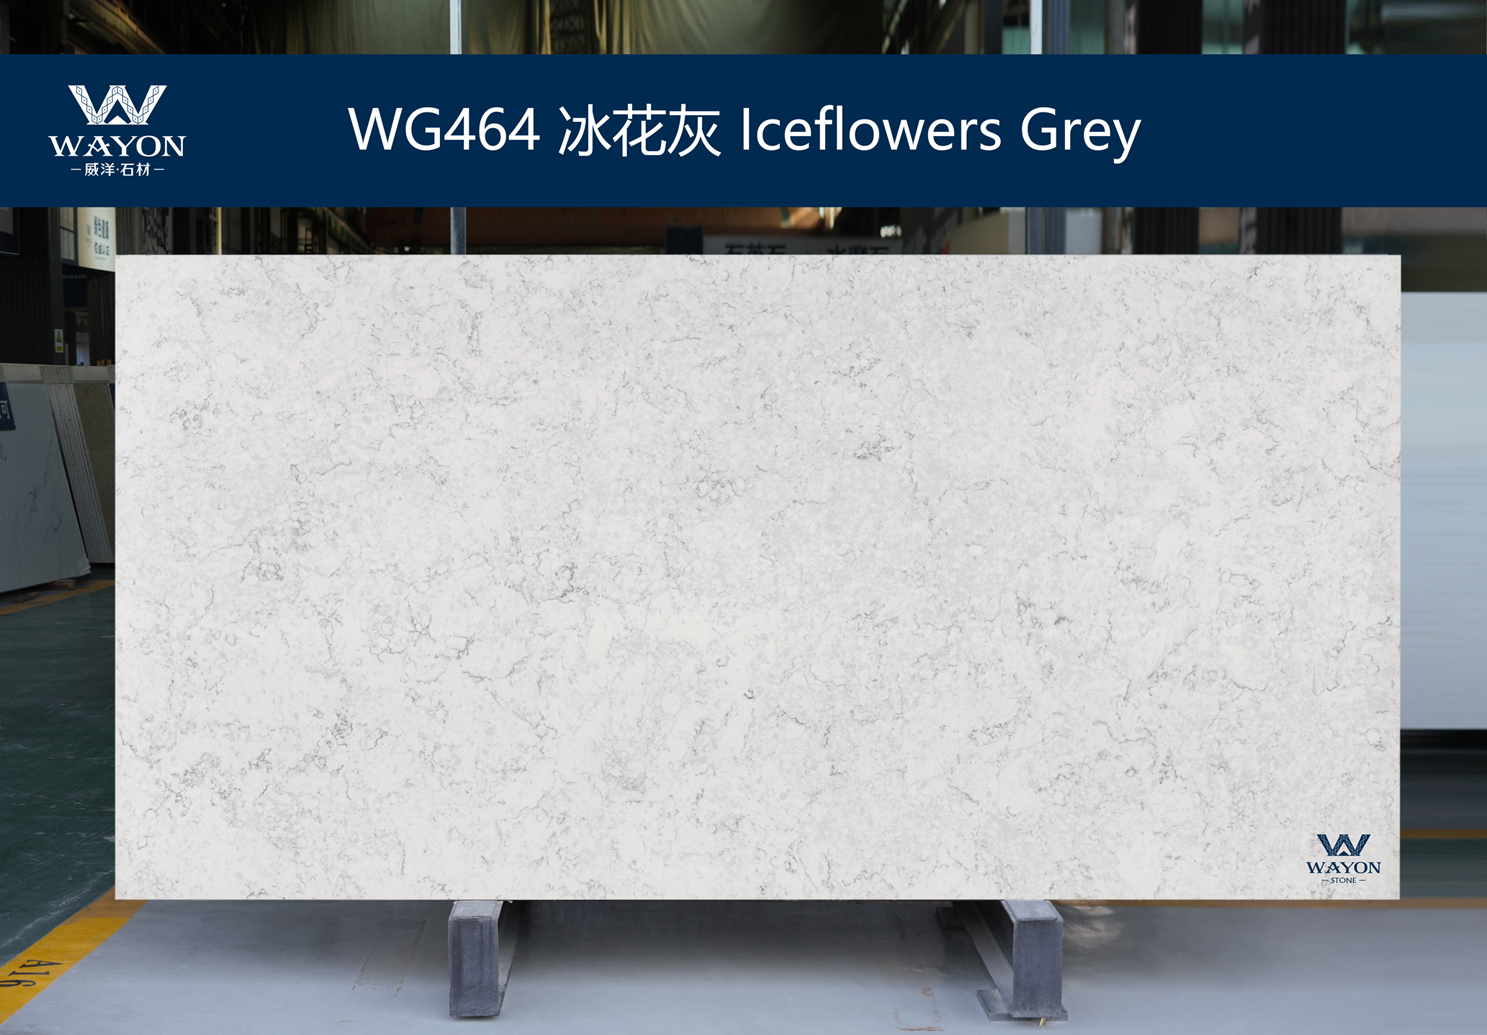 WG464 Iceflowers Grey